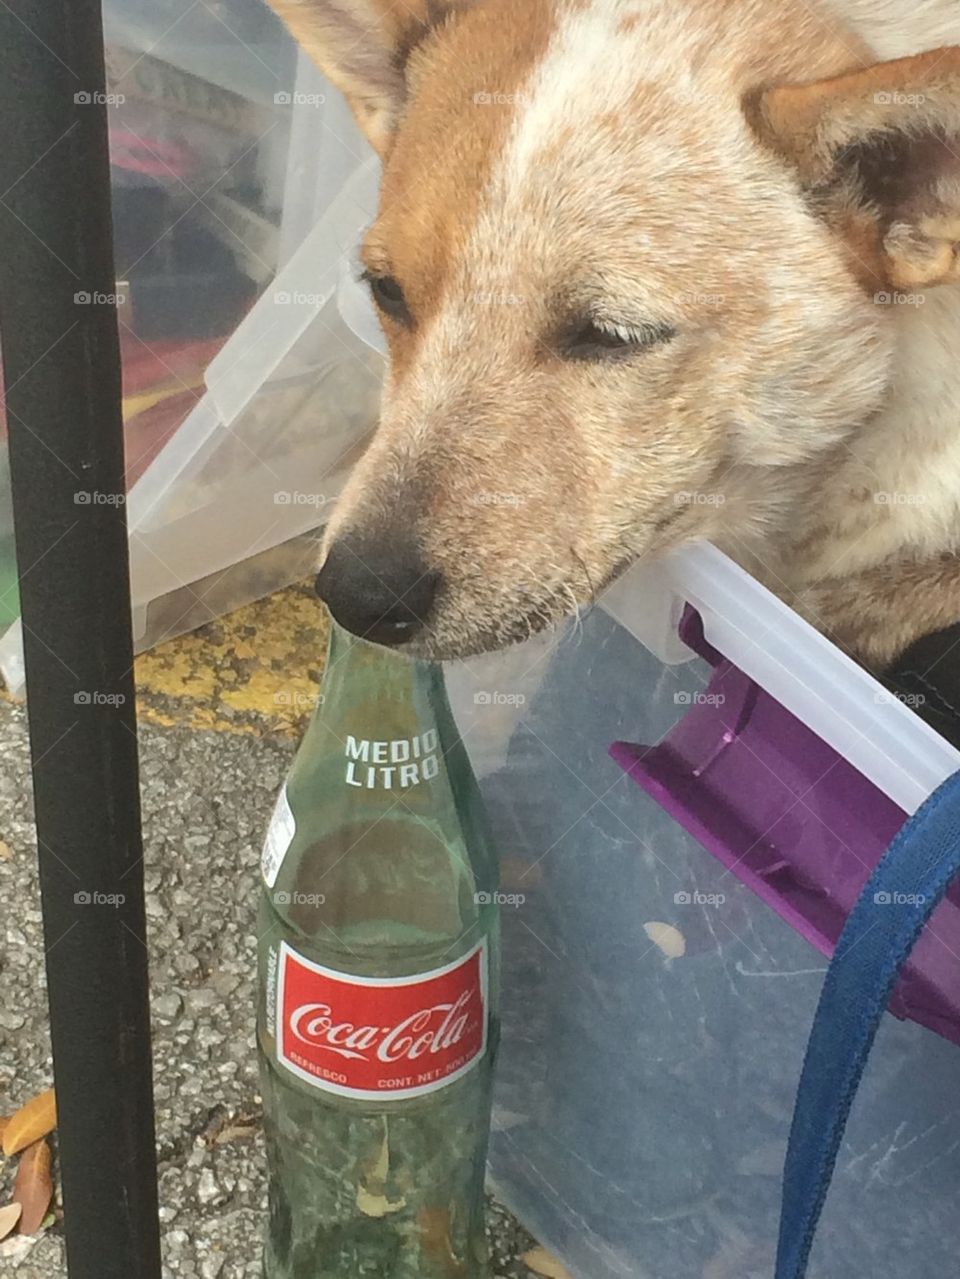 Coke dog